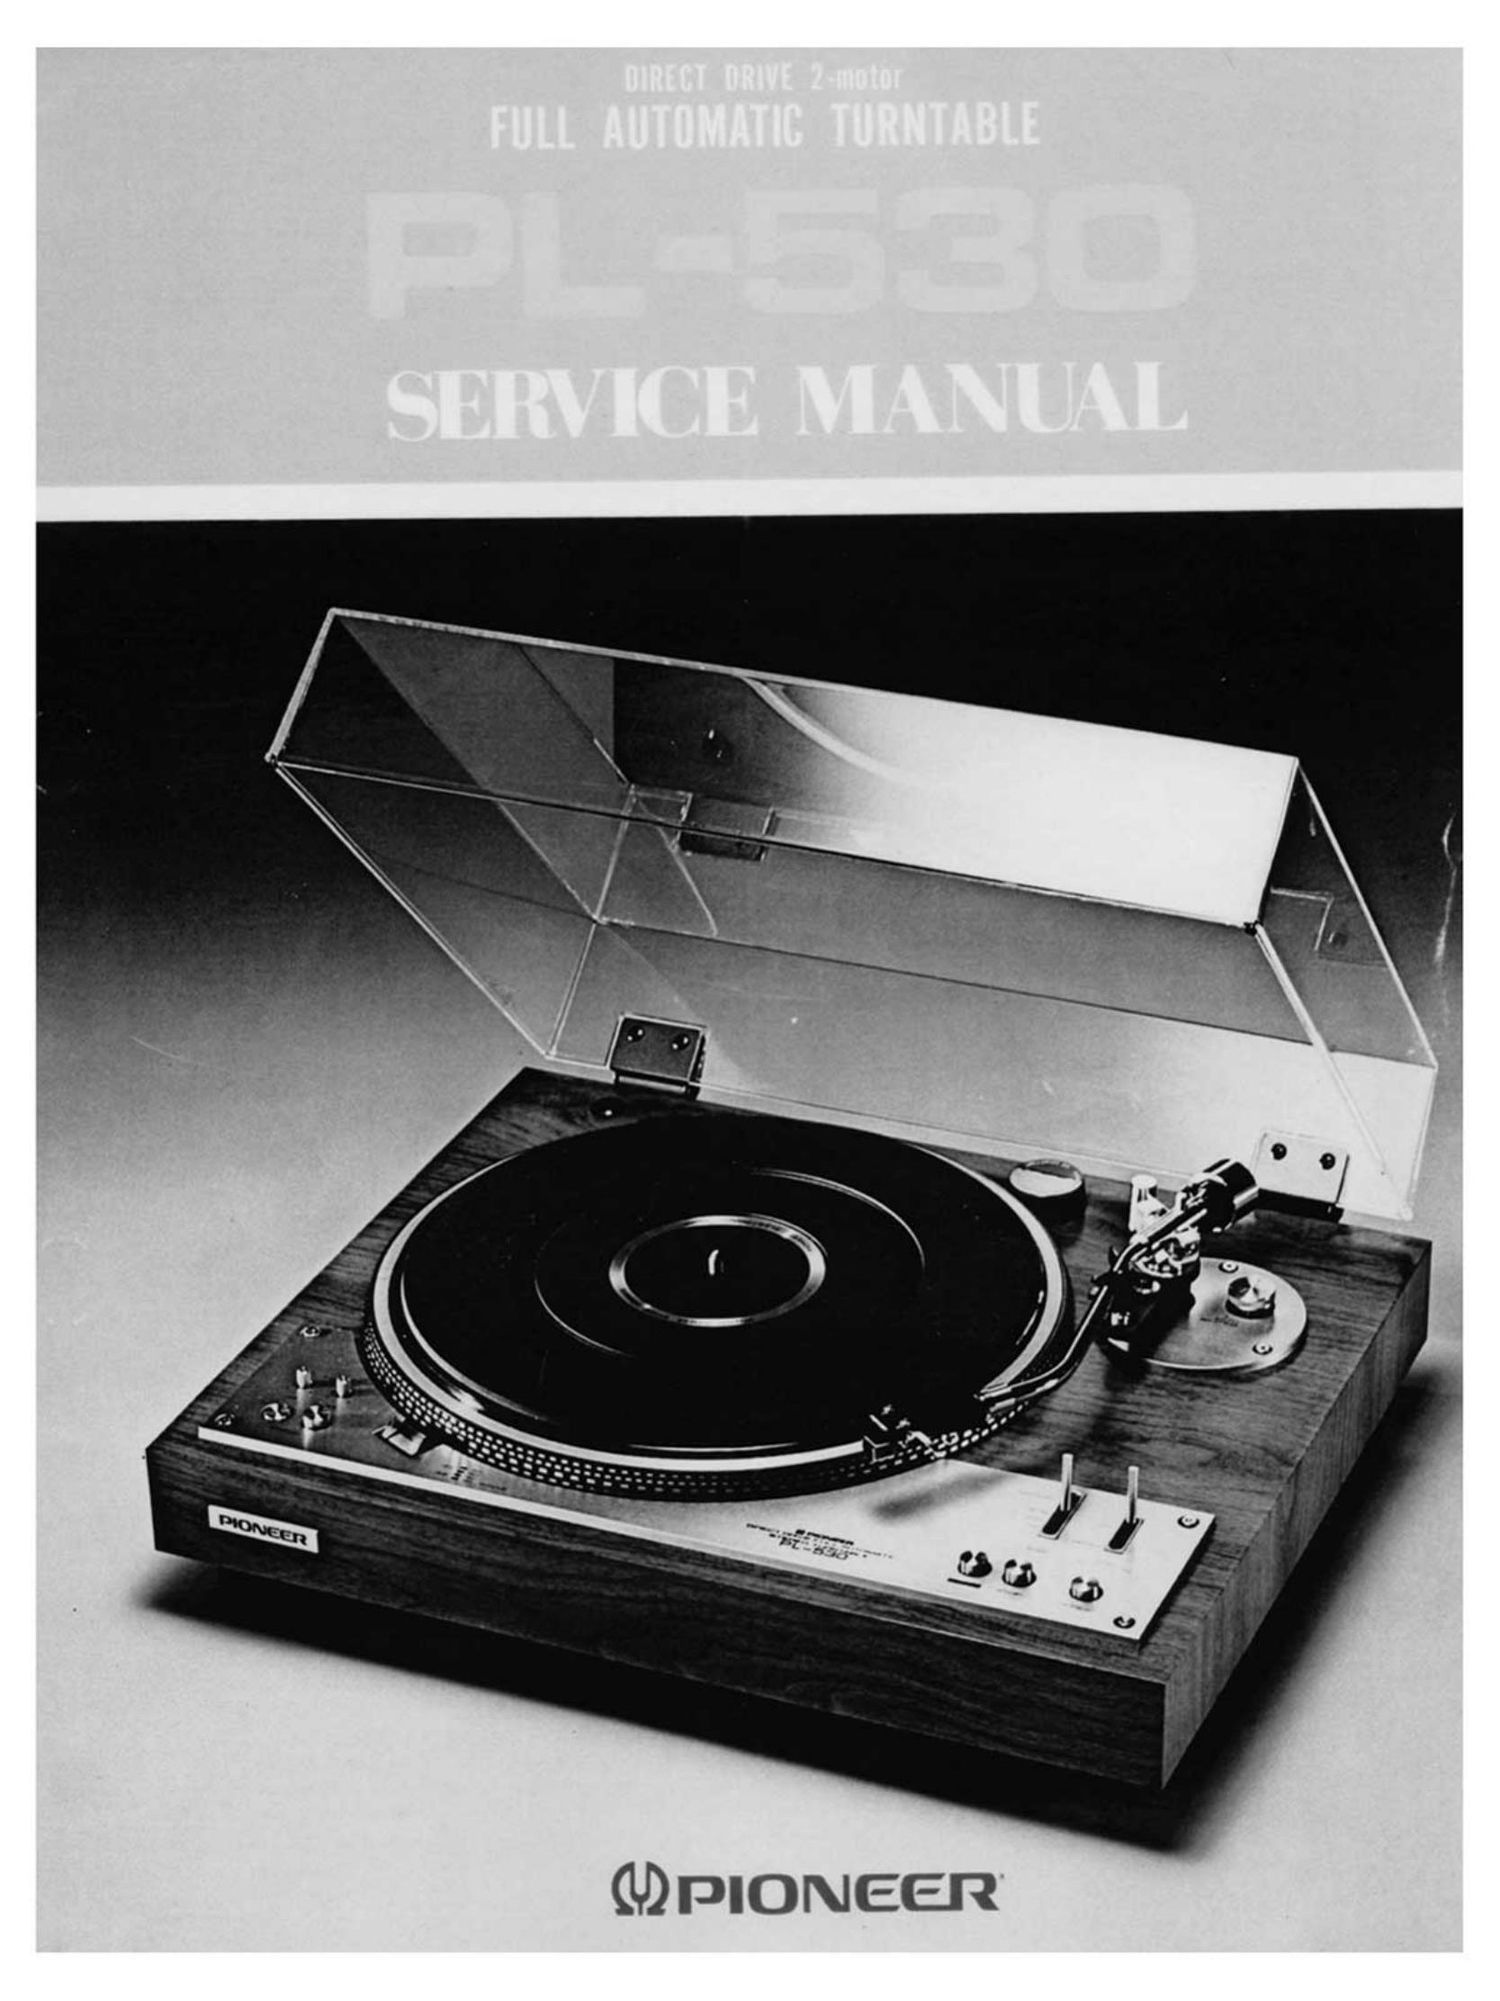 pioneer pl 530 service manual